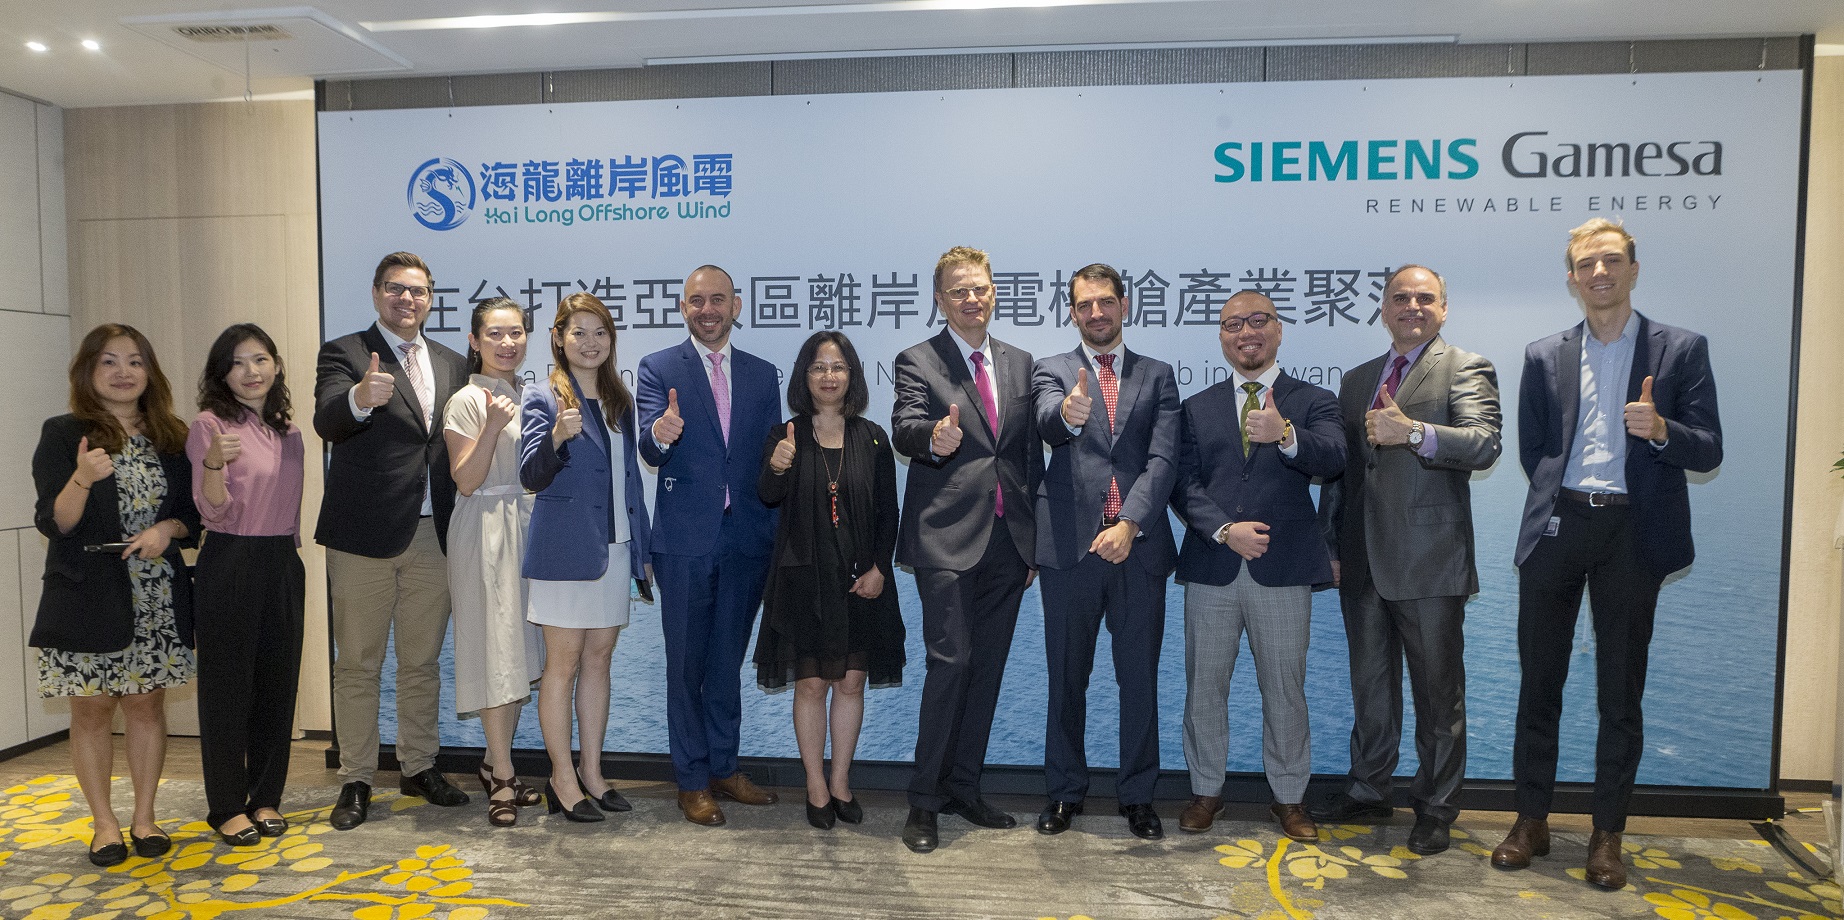 Siemens Gamesa unveils major expansion plans in Taiwan